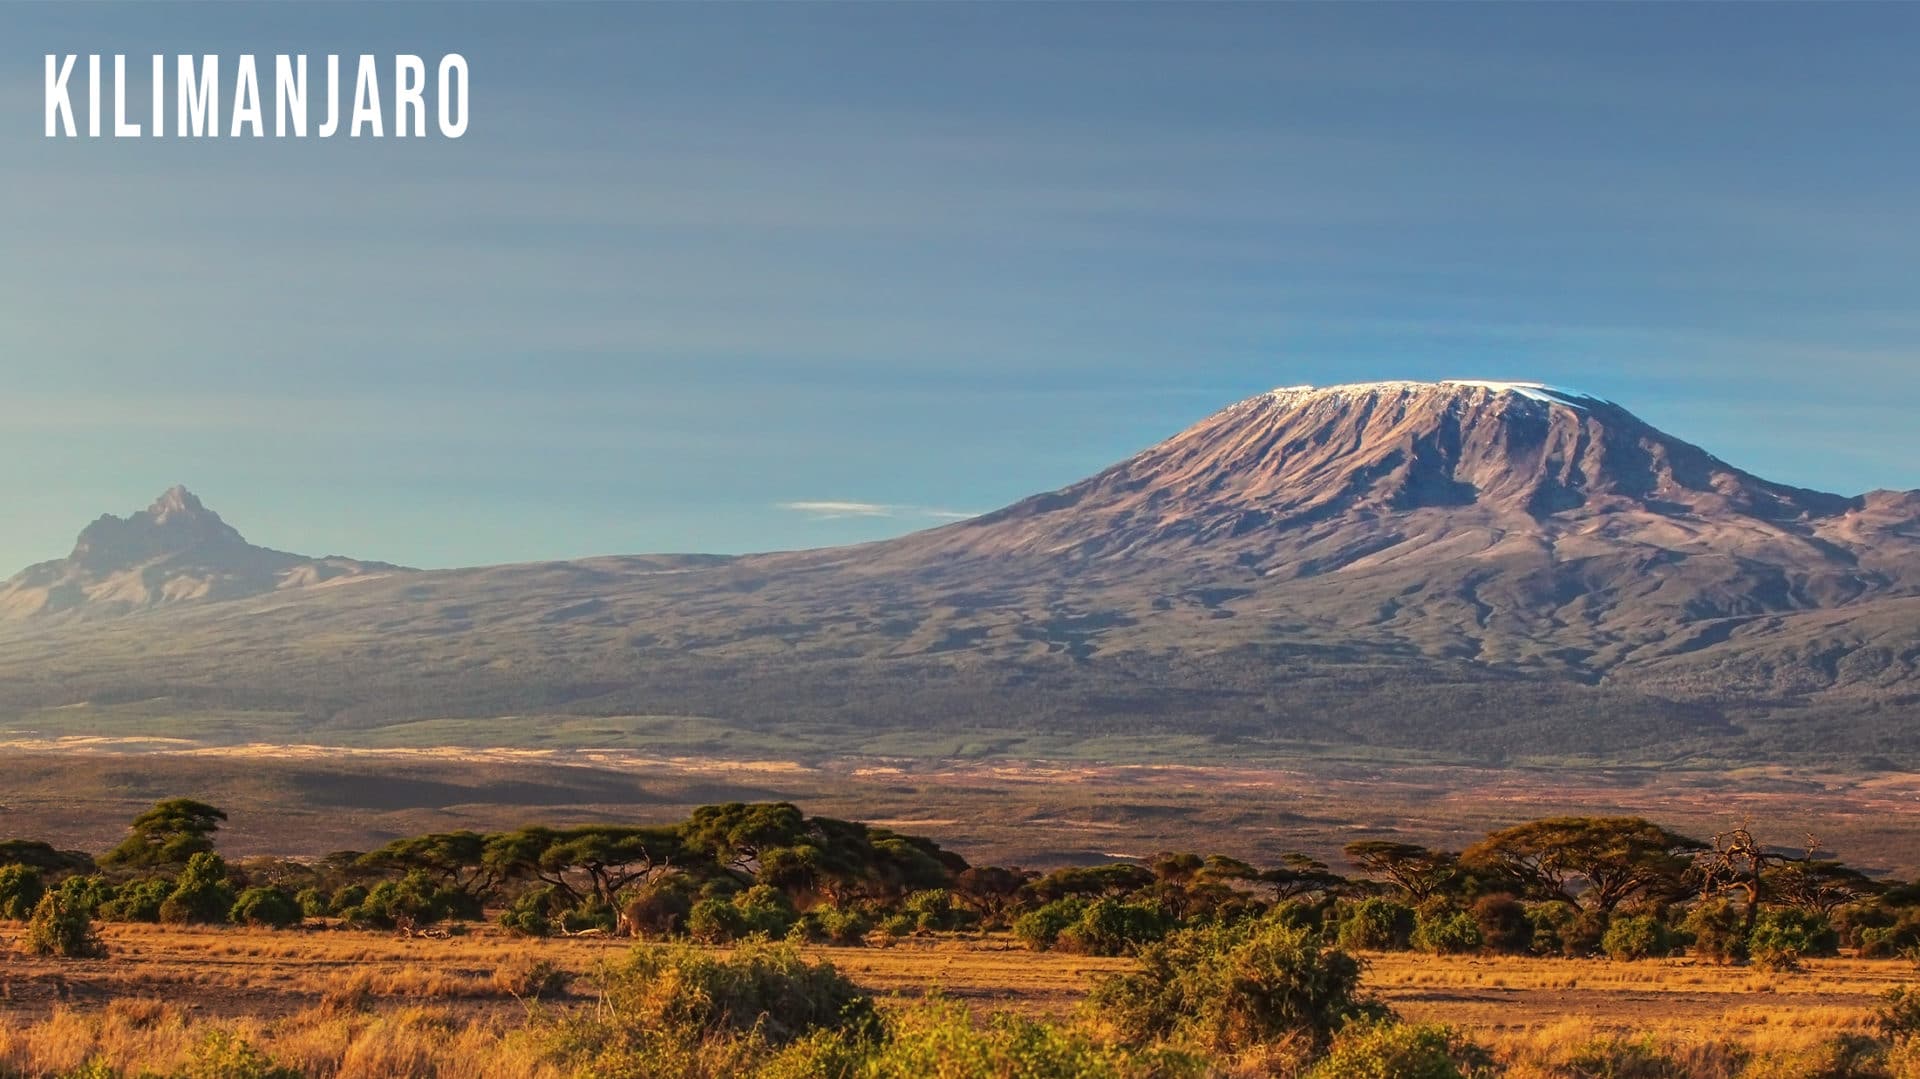 How long does it take to climb Mount Kilimanjaro